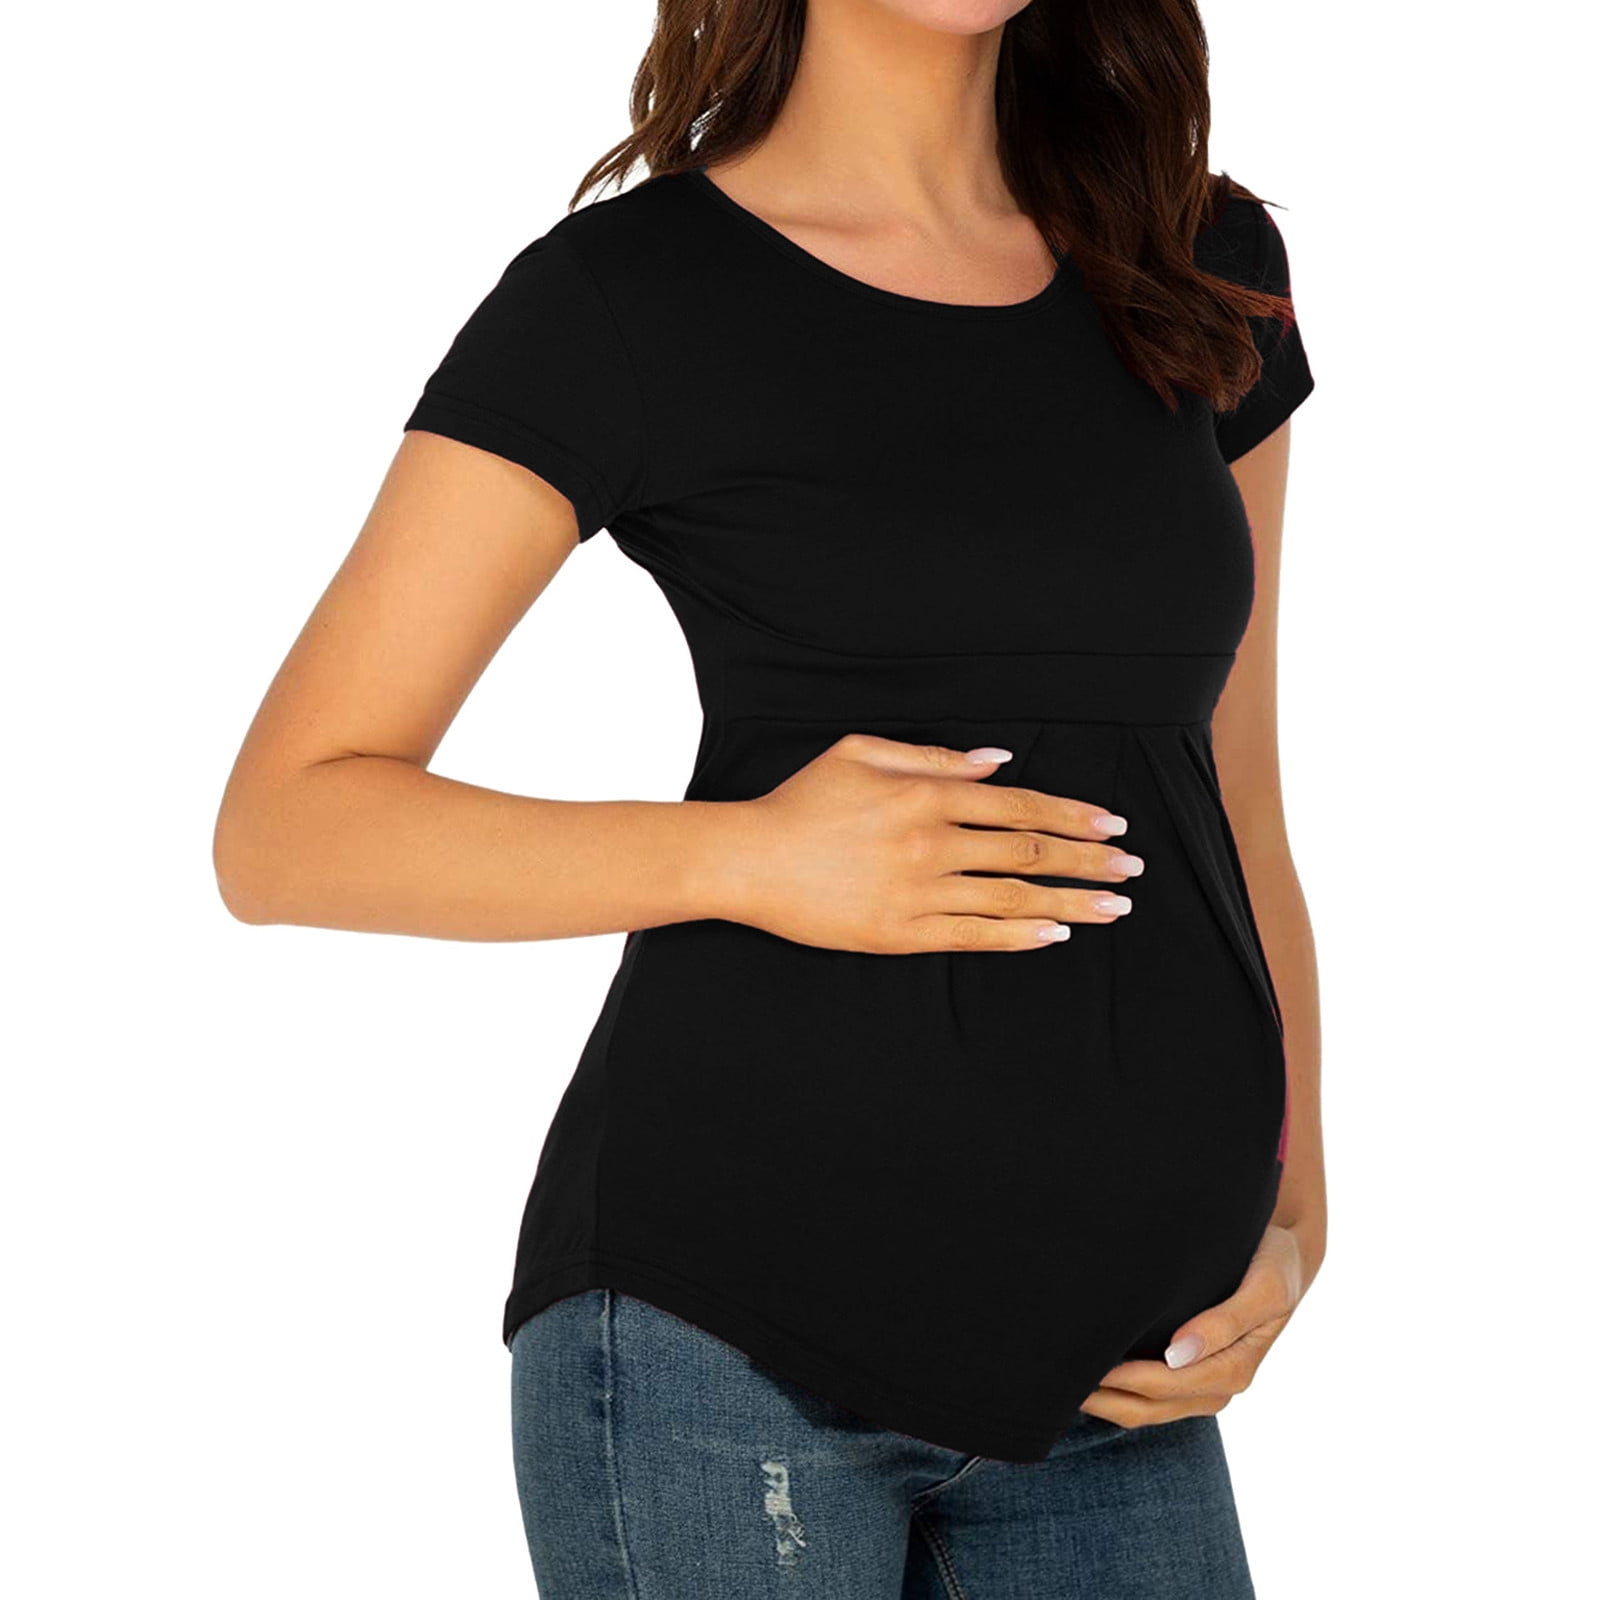 WAJCSHFS Plus Size Maternity Clothes Women's Maternity Ruched Top Blouse  Round Neck Elegant Sleeveless (Pink,M) 